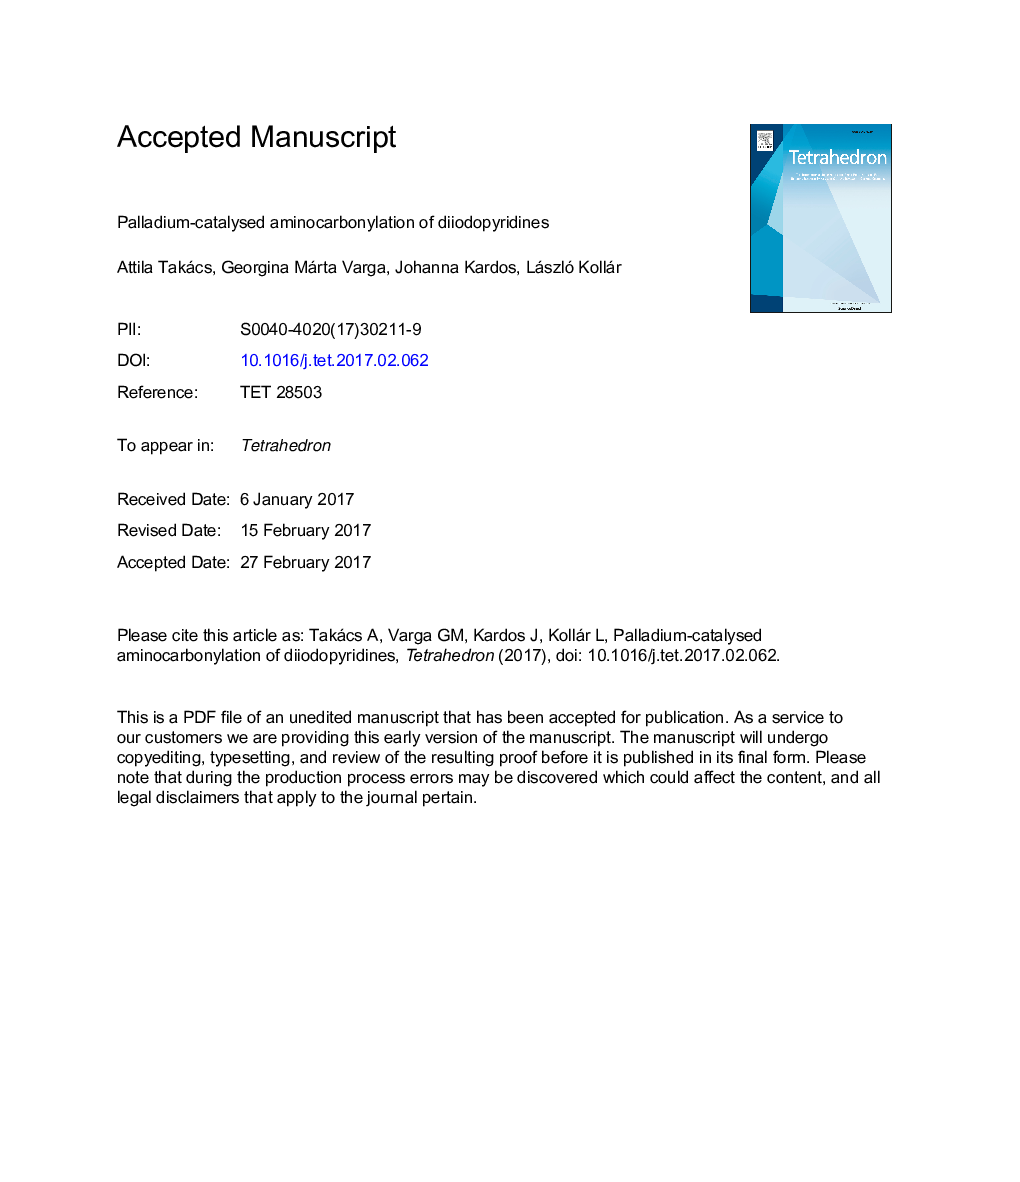 آمینوکربنیلت کردن دیاودوپیریدینها توسط پالادیوم کاتالیزور 